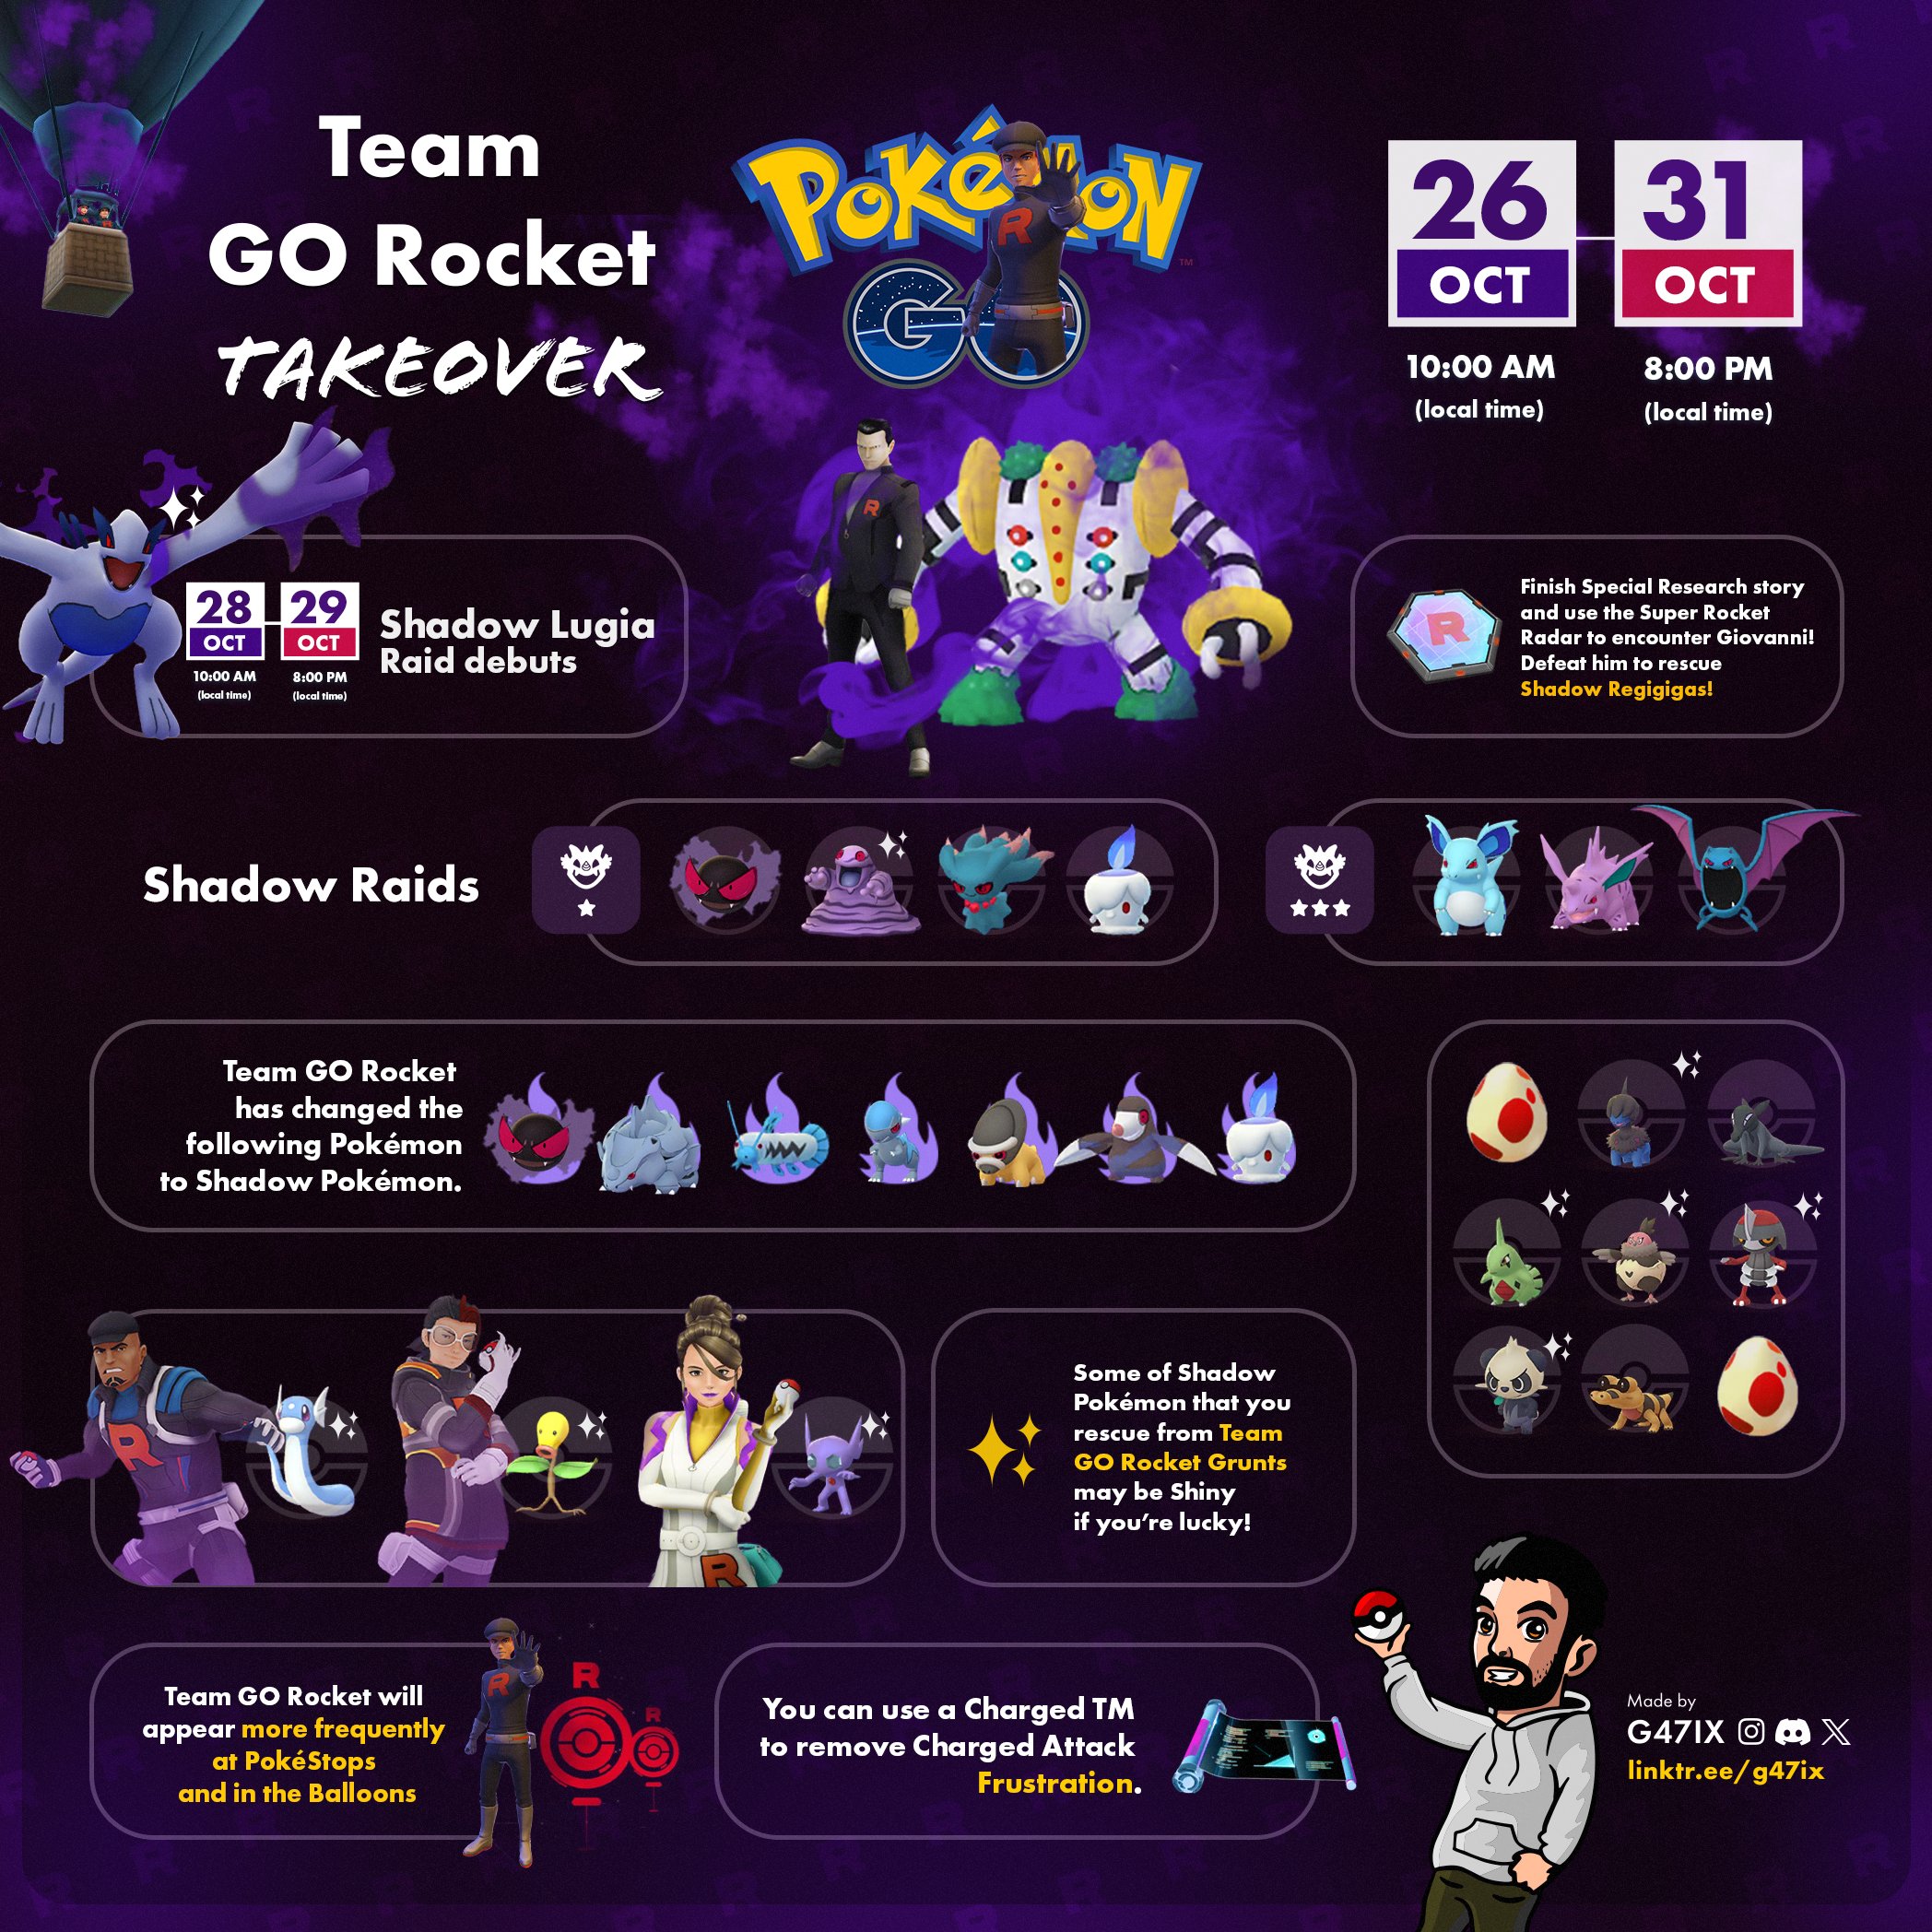 G47IX  Pokémon GO on X: Team GO Rocket Takeover ⚠️ Leaders lineup! Cliff  - Dratini, Arlo - Bellsprout, Sierra - Sableye Seems solid lineup. I wonder  if Decoy grunts will get